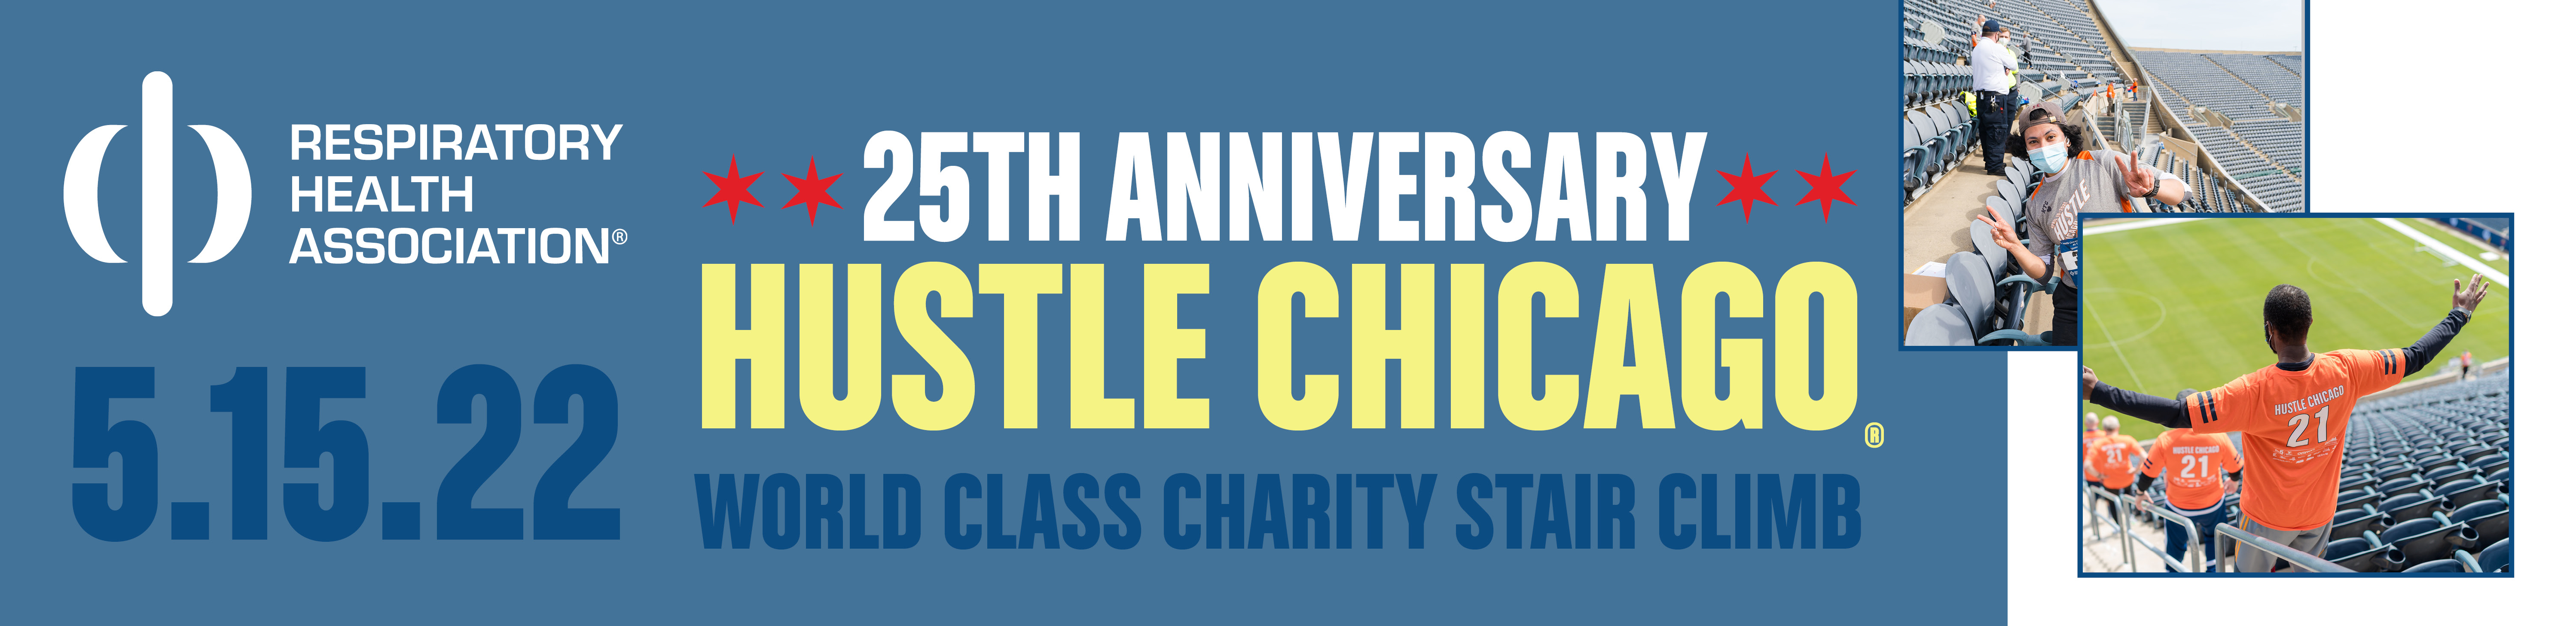 hustle chicago event